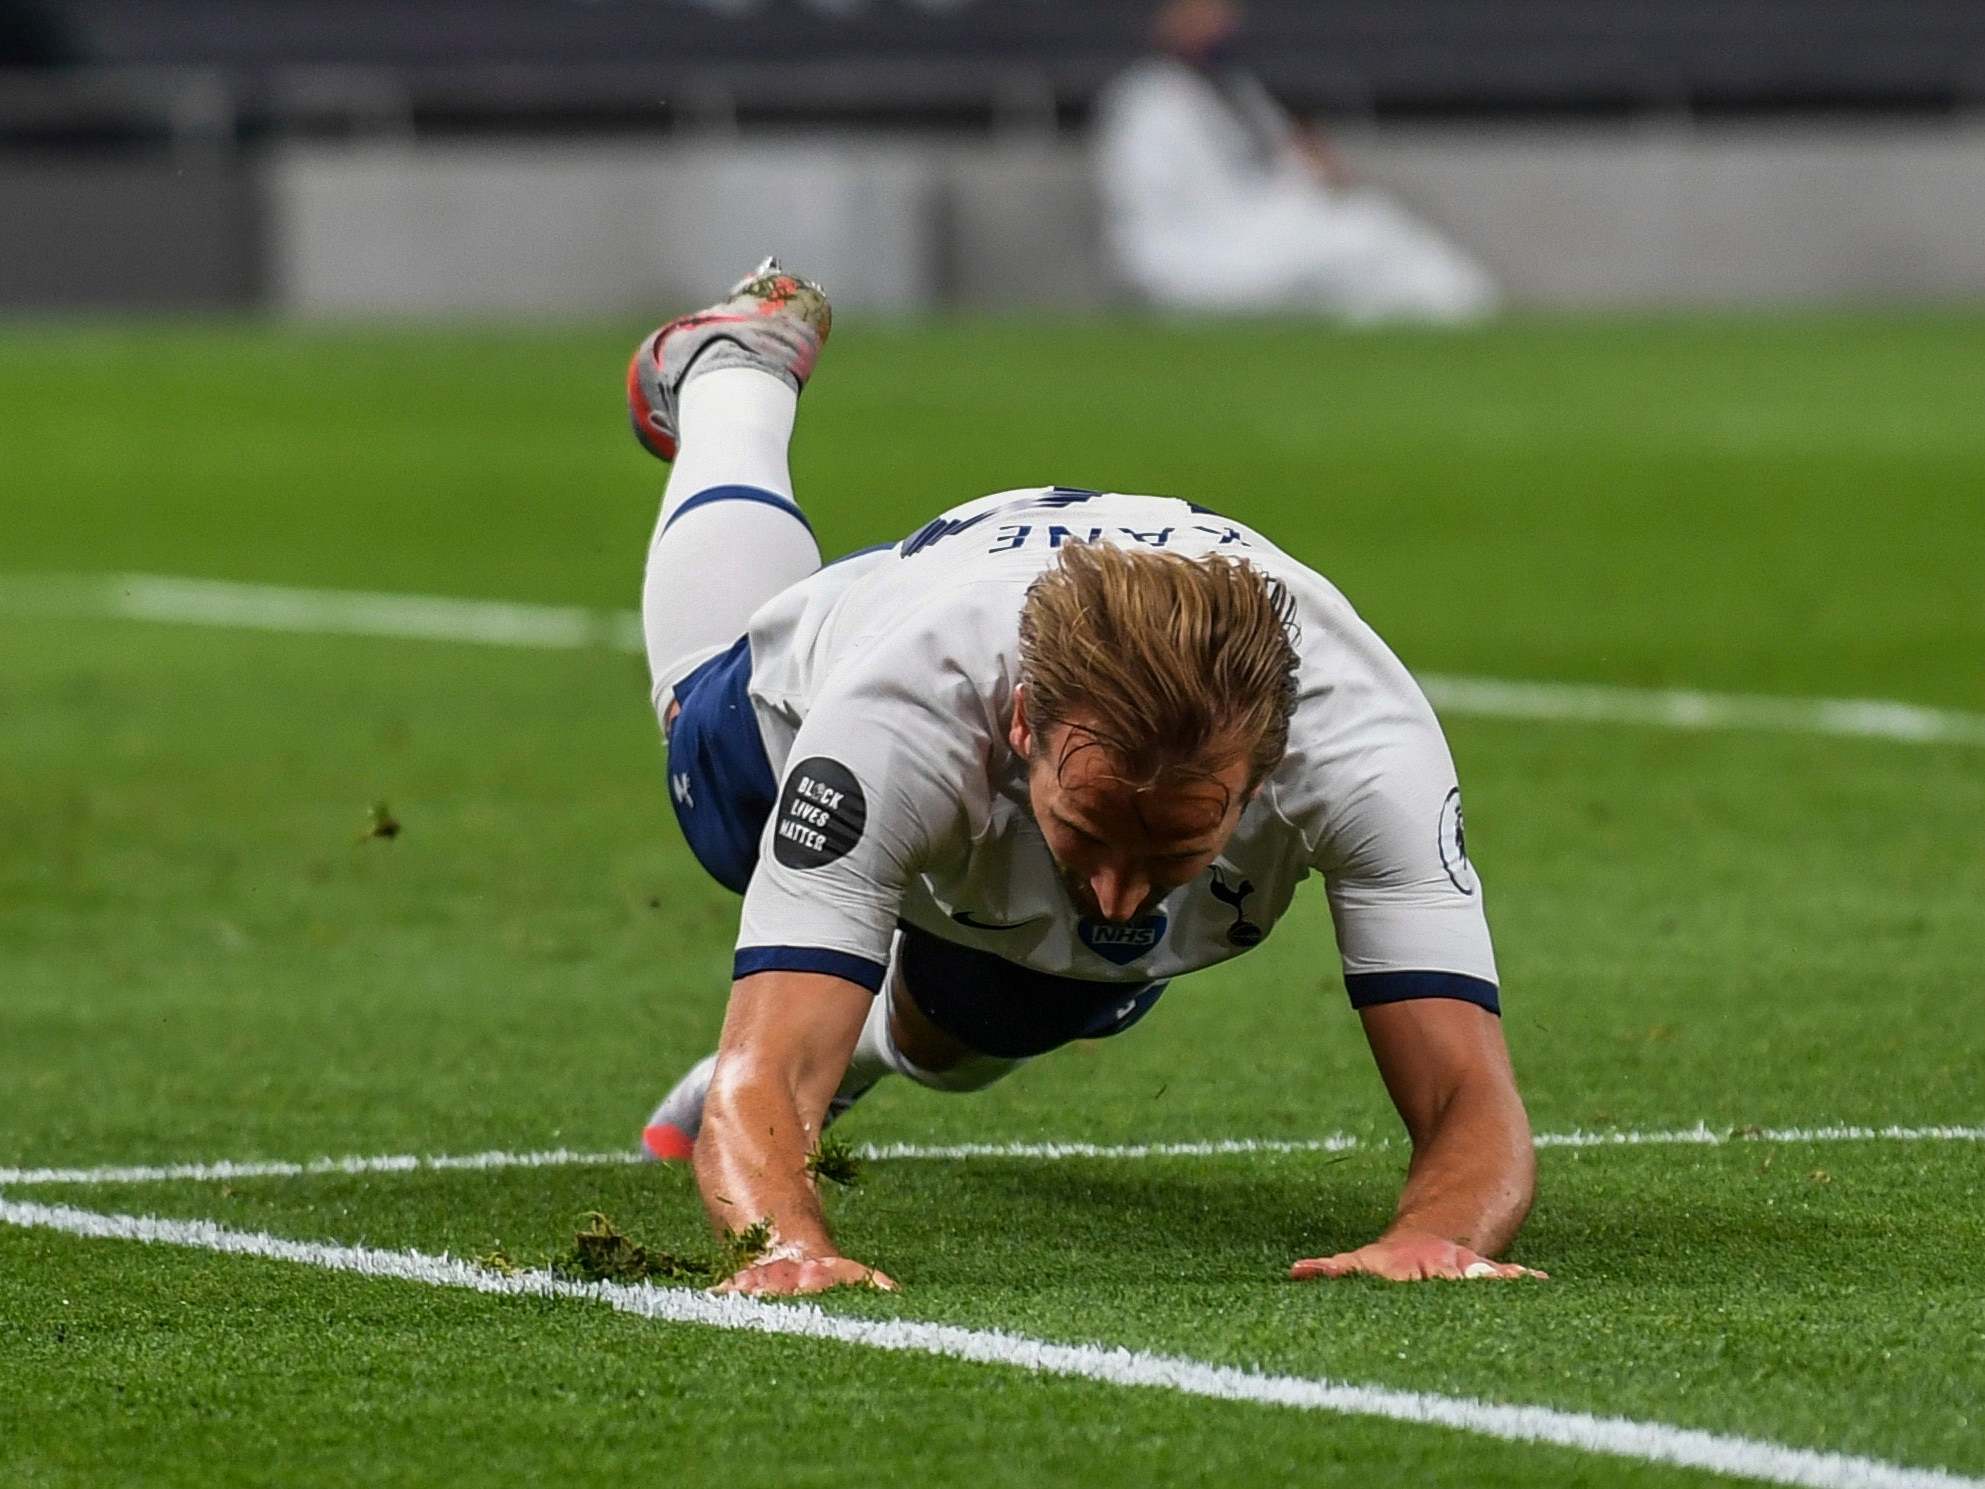 Harry Kane celebrates after scoring for Tottenham against West Ham